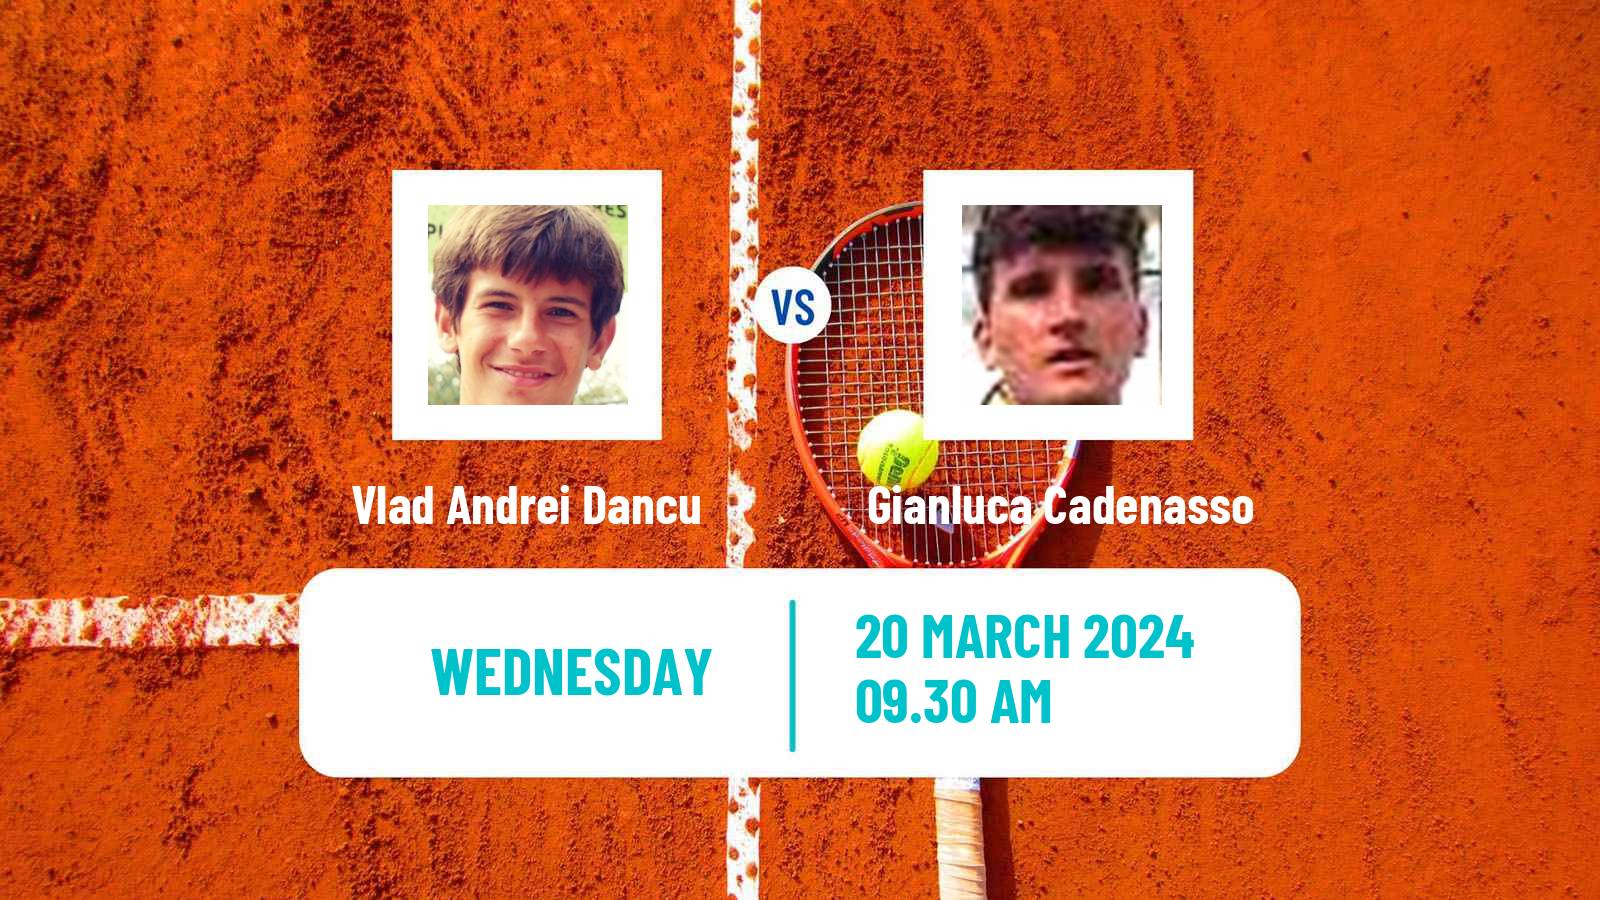 Tennis ITF M15 Alaminos Larnaca 2 Men Vlad Andrei Dancu - Gianluca Cadenasso